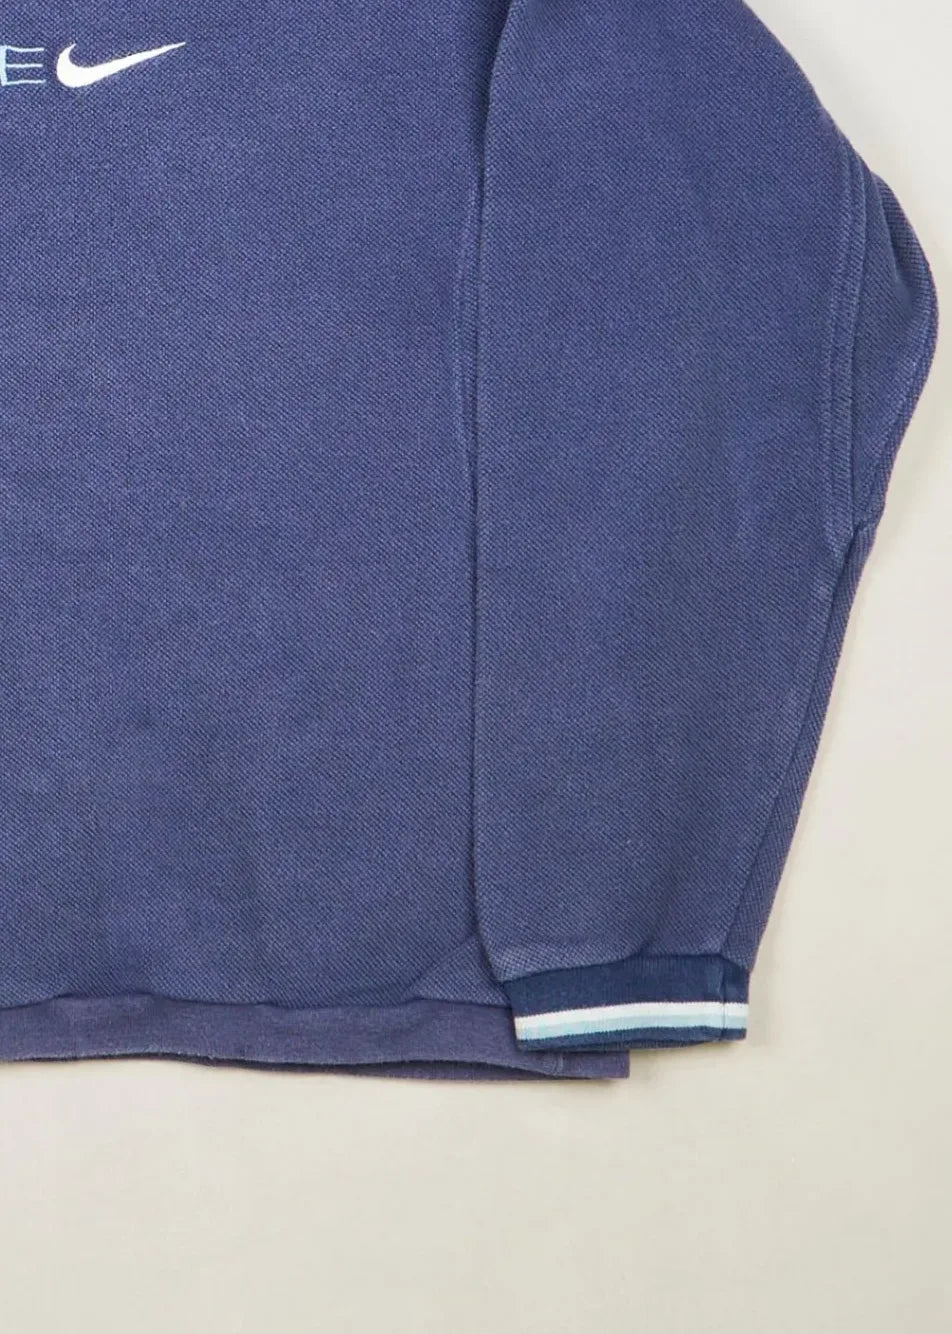 Nike - Sweatshirt (XS) Bottom Right